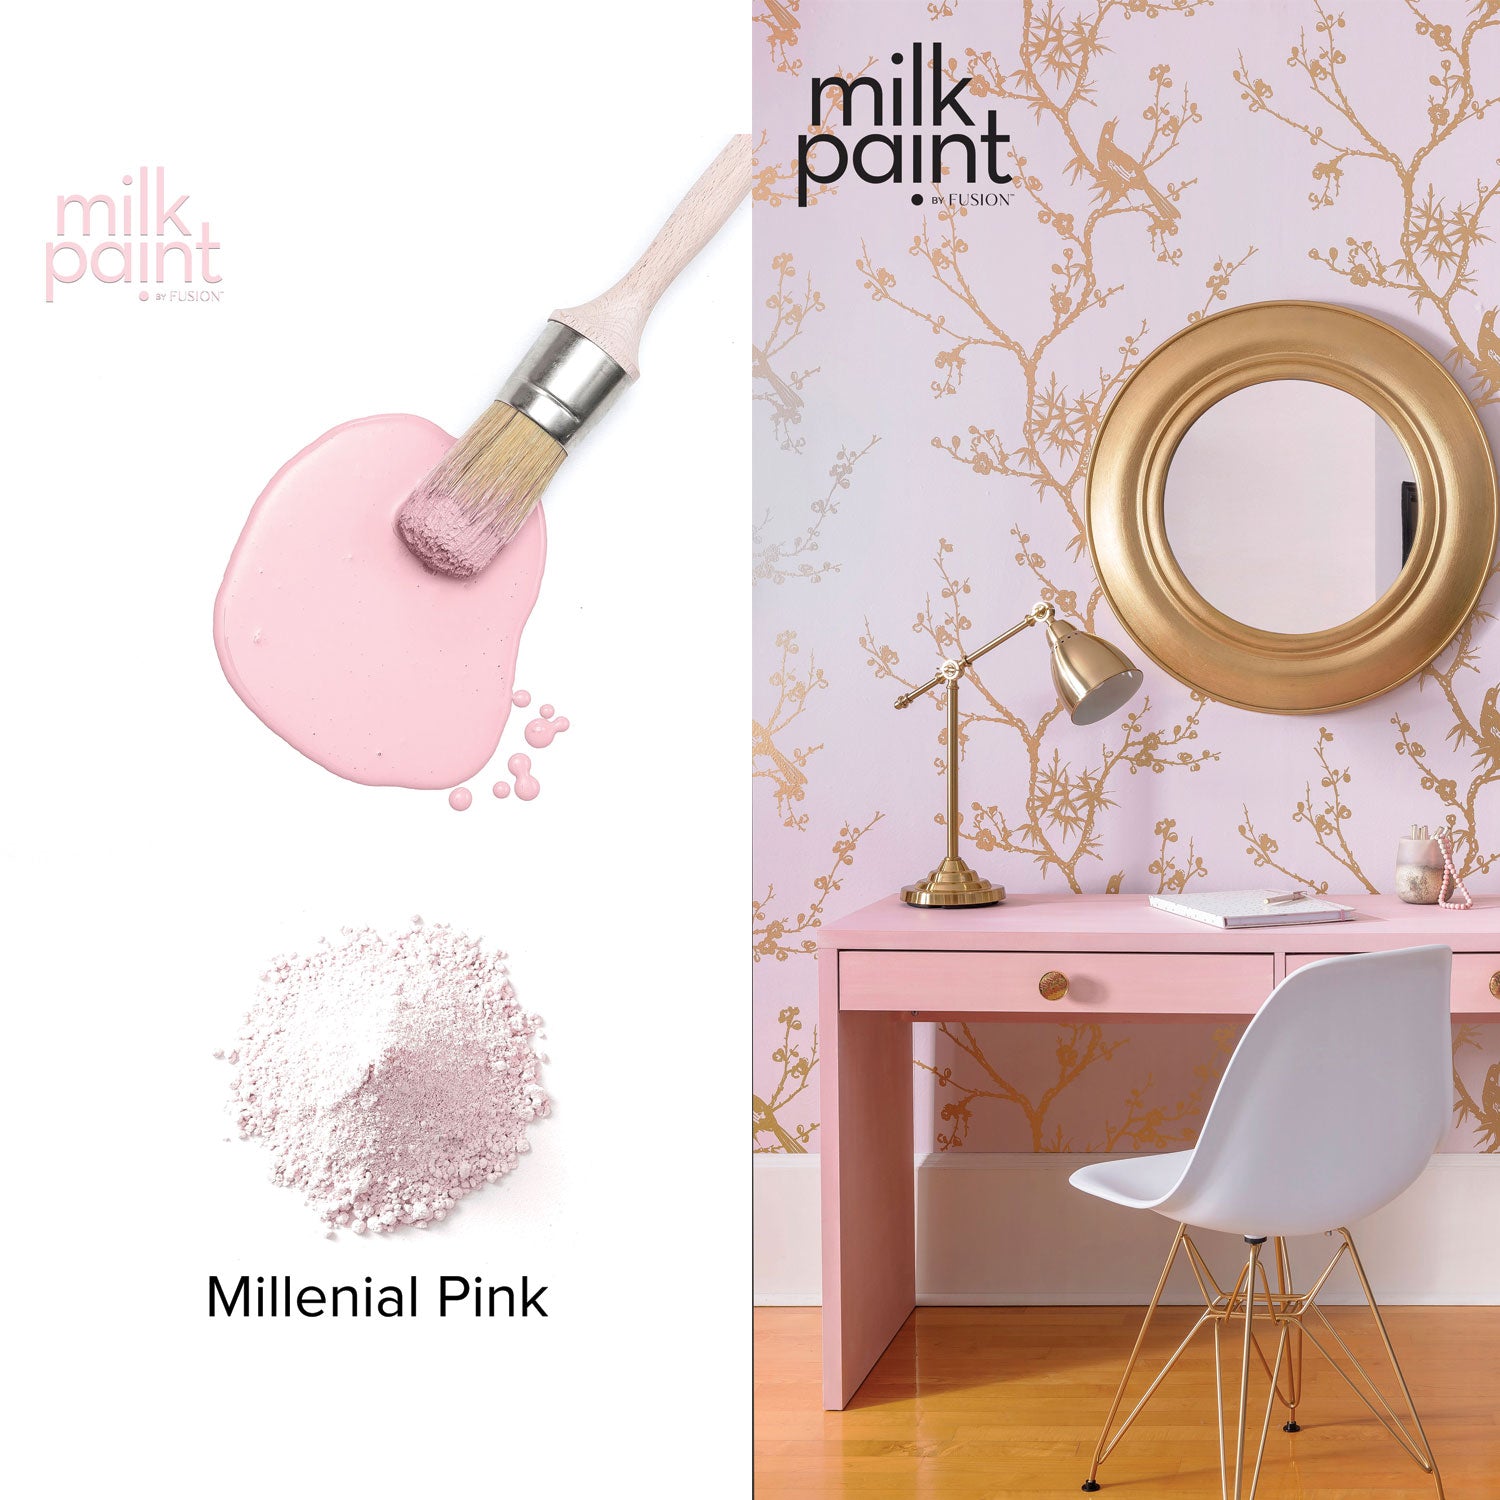 Fusion-Milk-Paint-Millennial-Pink-Swatch.jpg